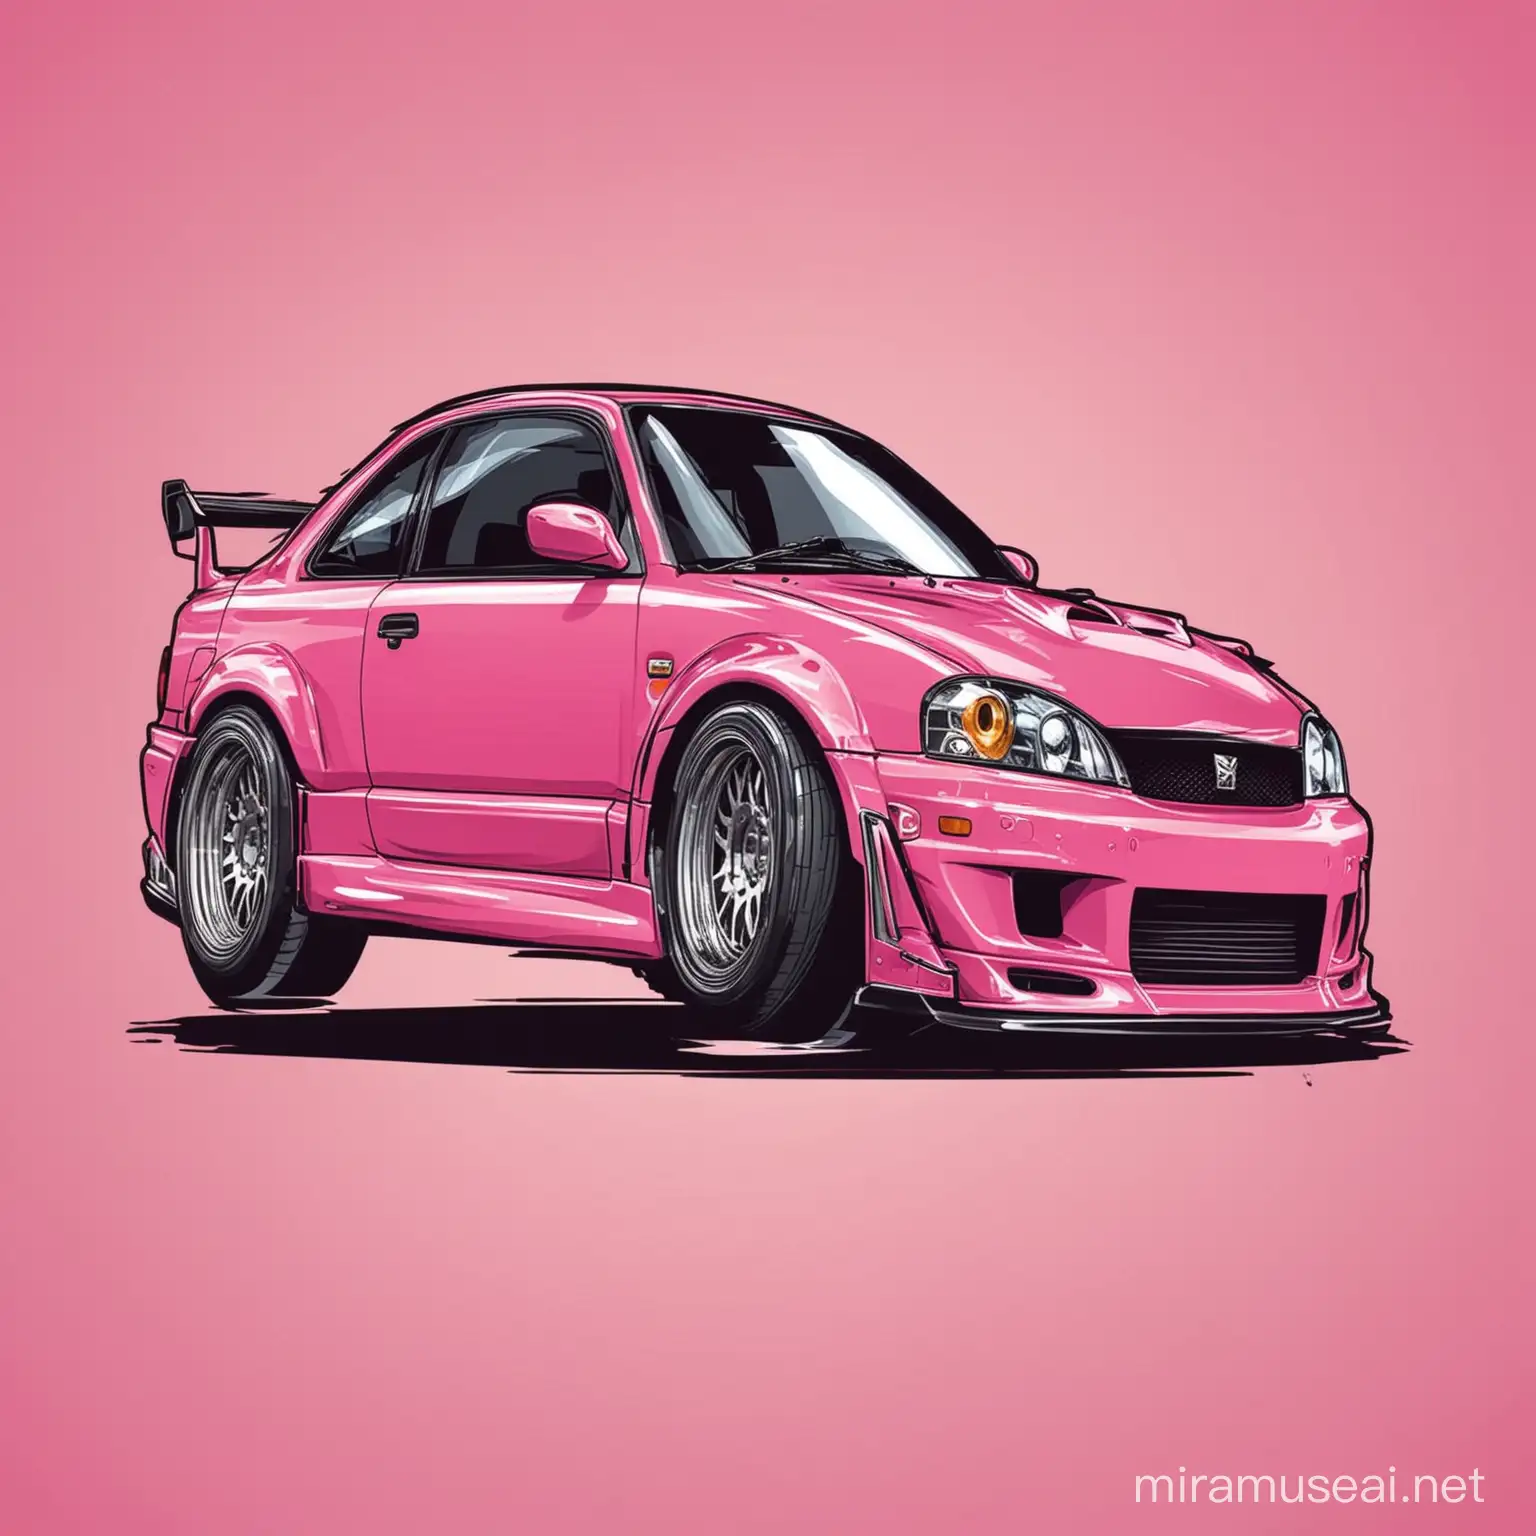 Vibrant JDM Pink Car Vector Illustration